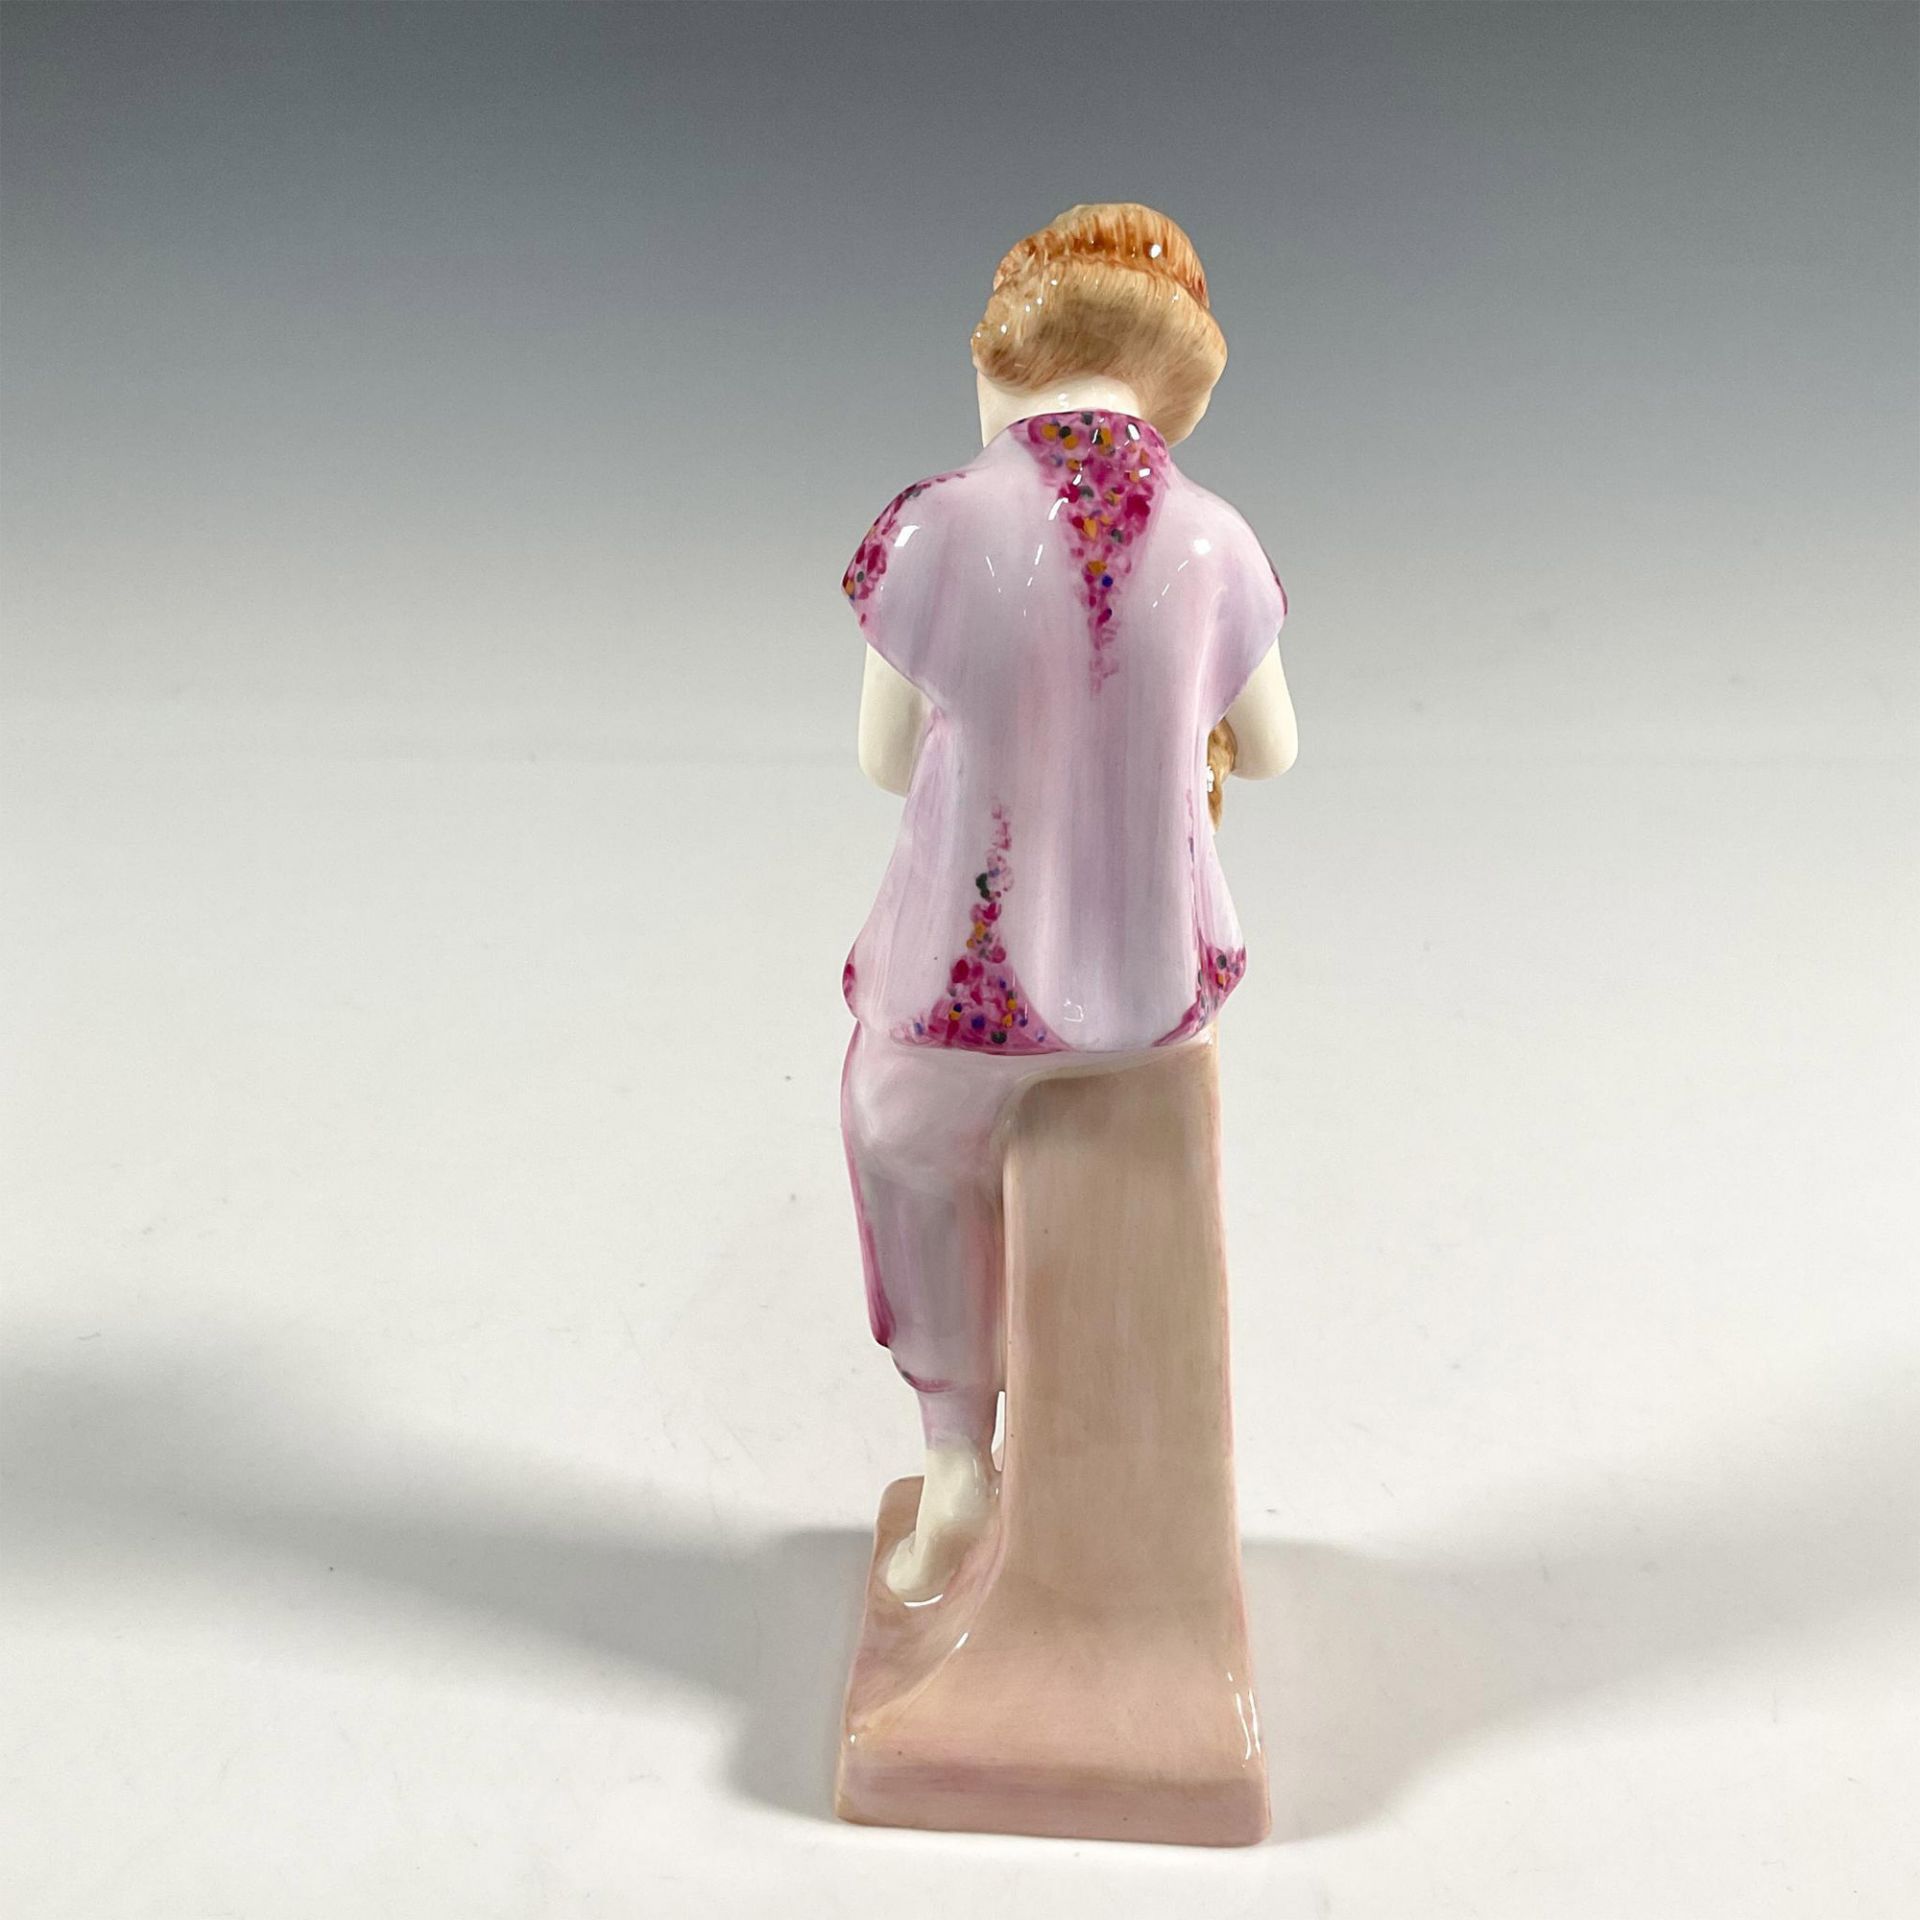 Lido Lady HN4247 - Royal Doulton Figurine - Image 2 of 3